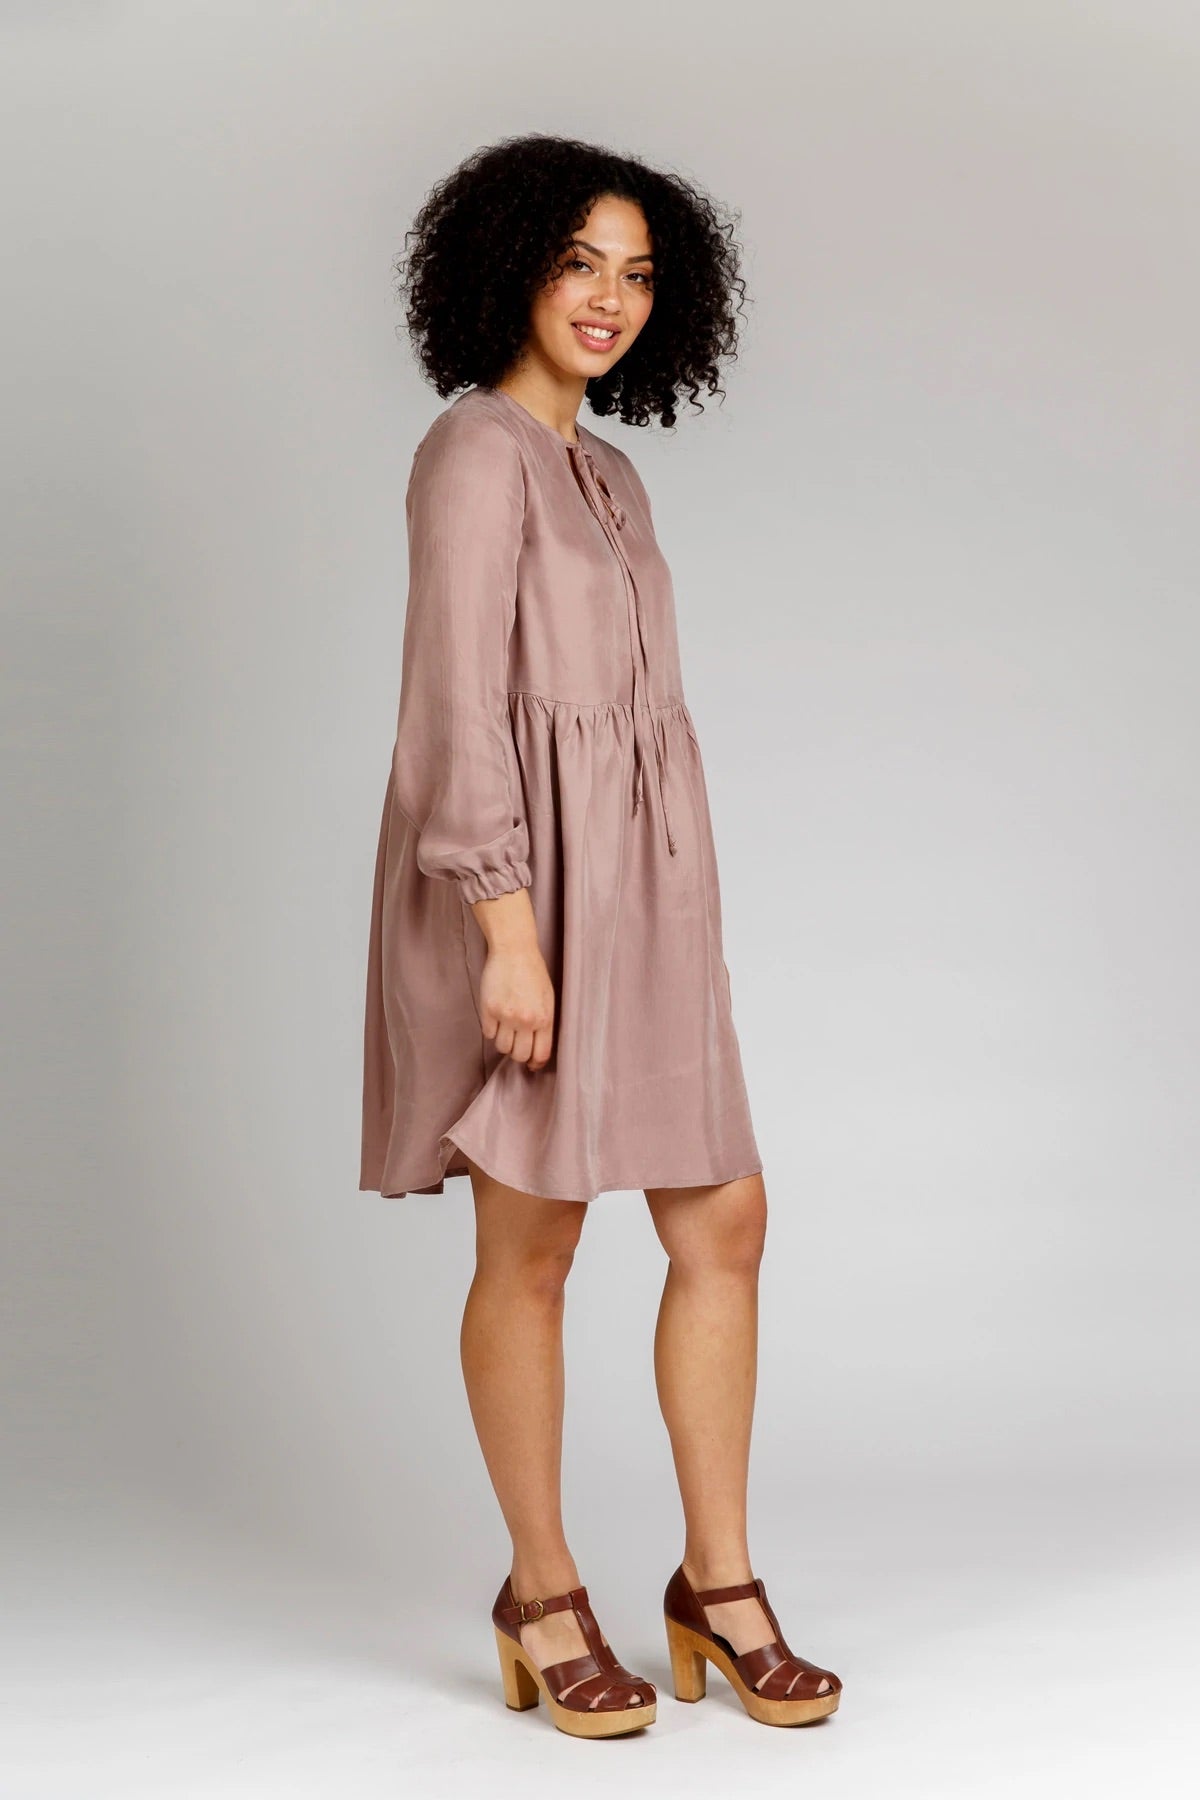 Megan Nielsen - Sudley Dress & Blouse Sewing Pattern